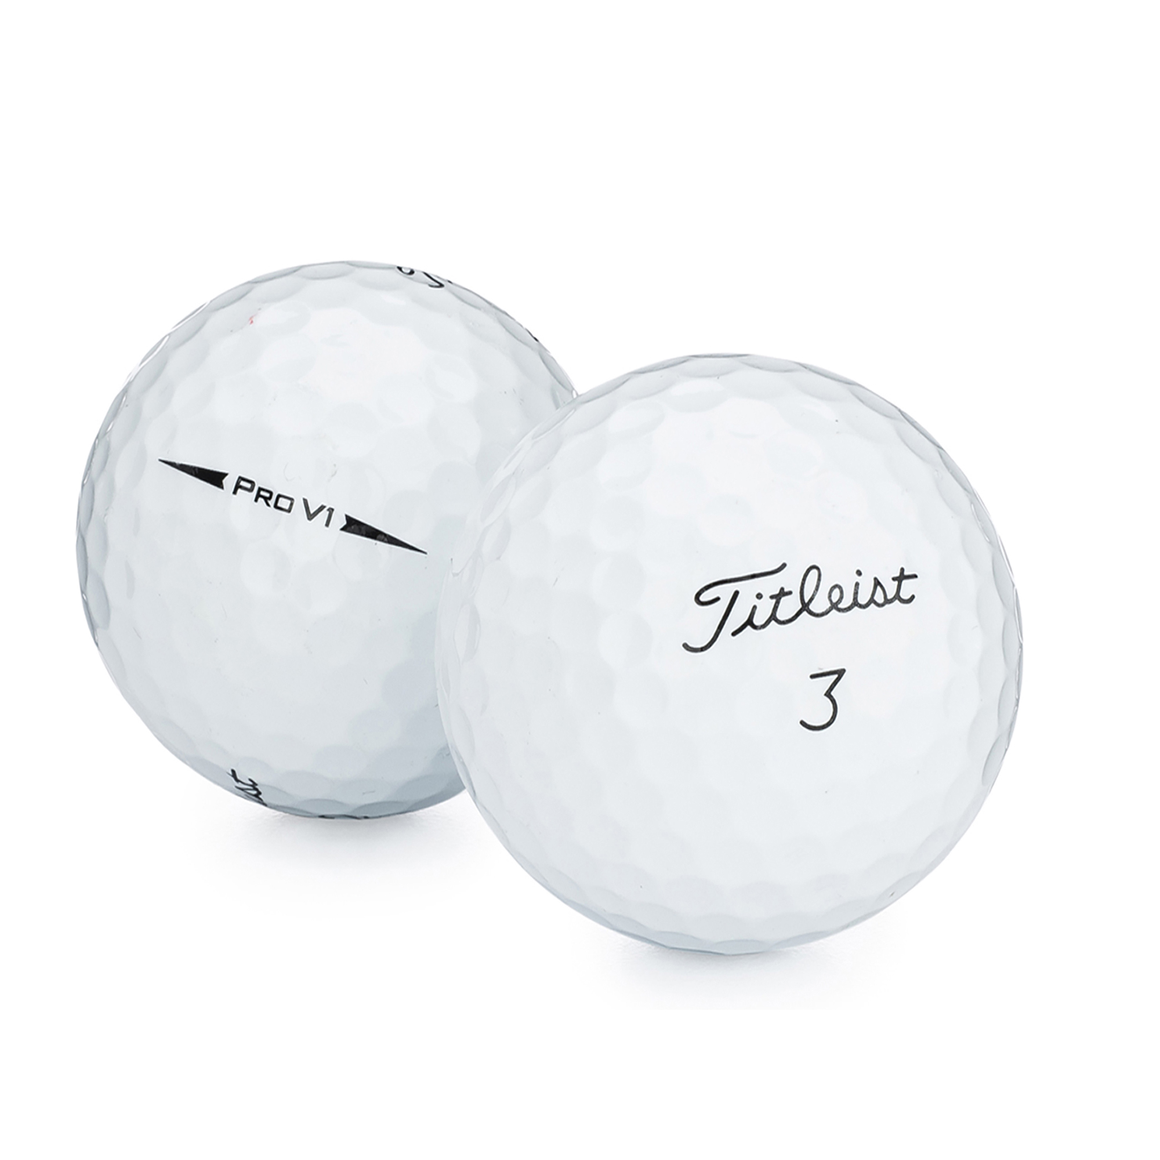 Titleist Pro V1 Golf Balls, Good Quality, 50 Pack, by Hunter Golf - image 1 of 9